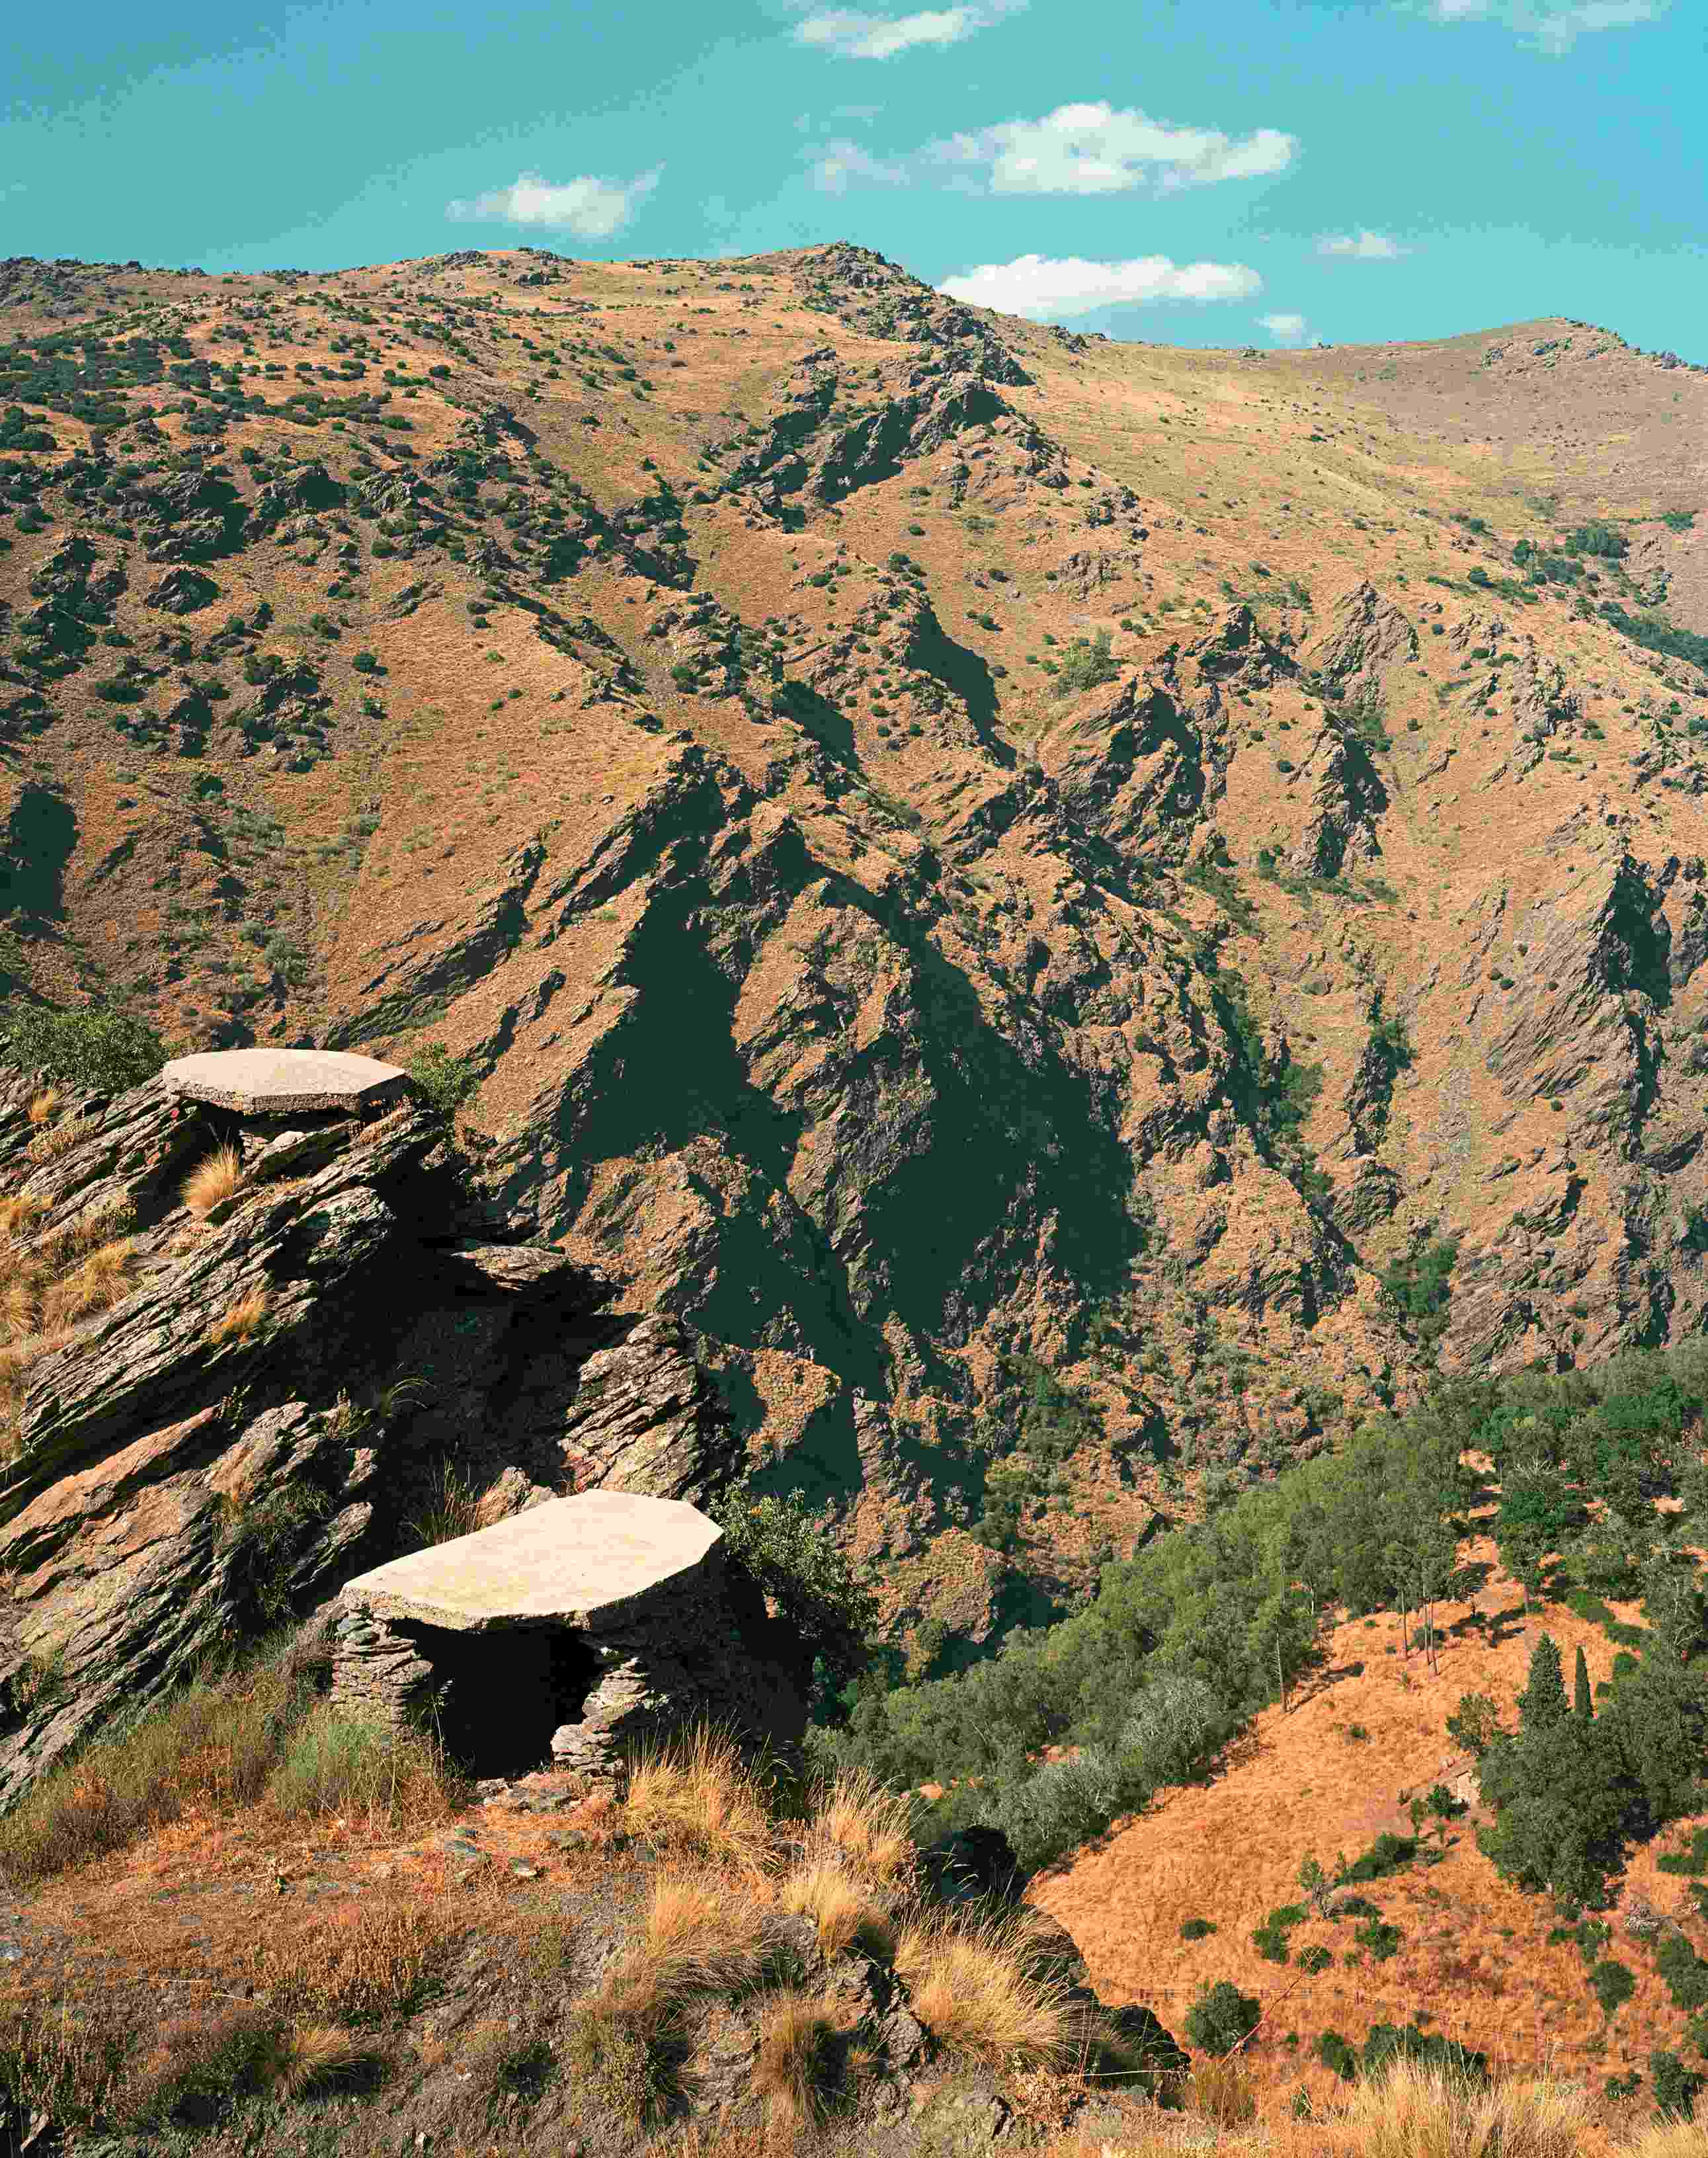 Observation posts. Barranco de San Juan, Güéjar Sierra, Spain, 2020